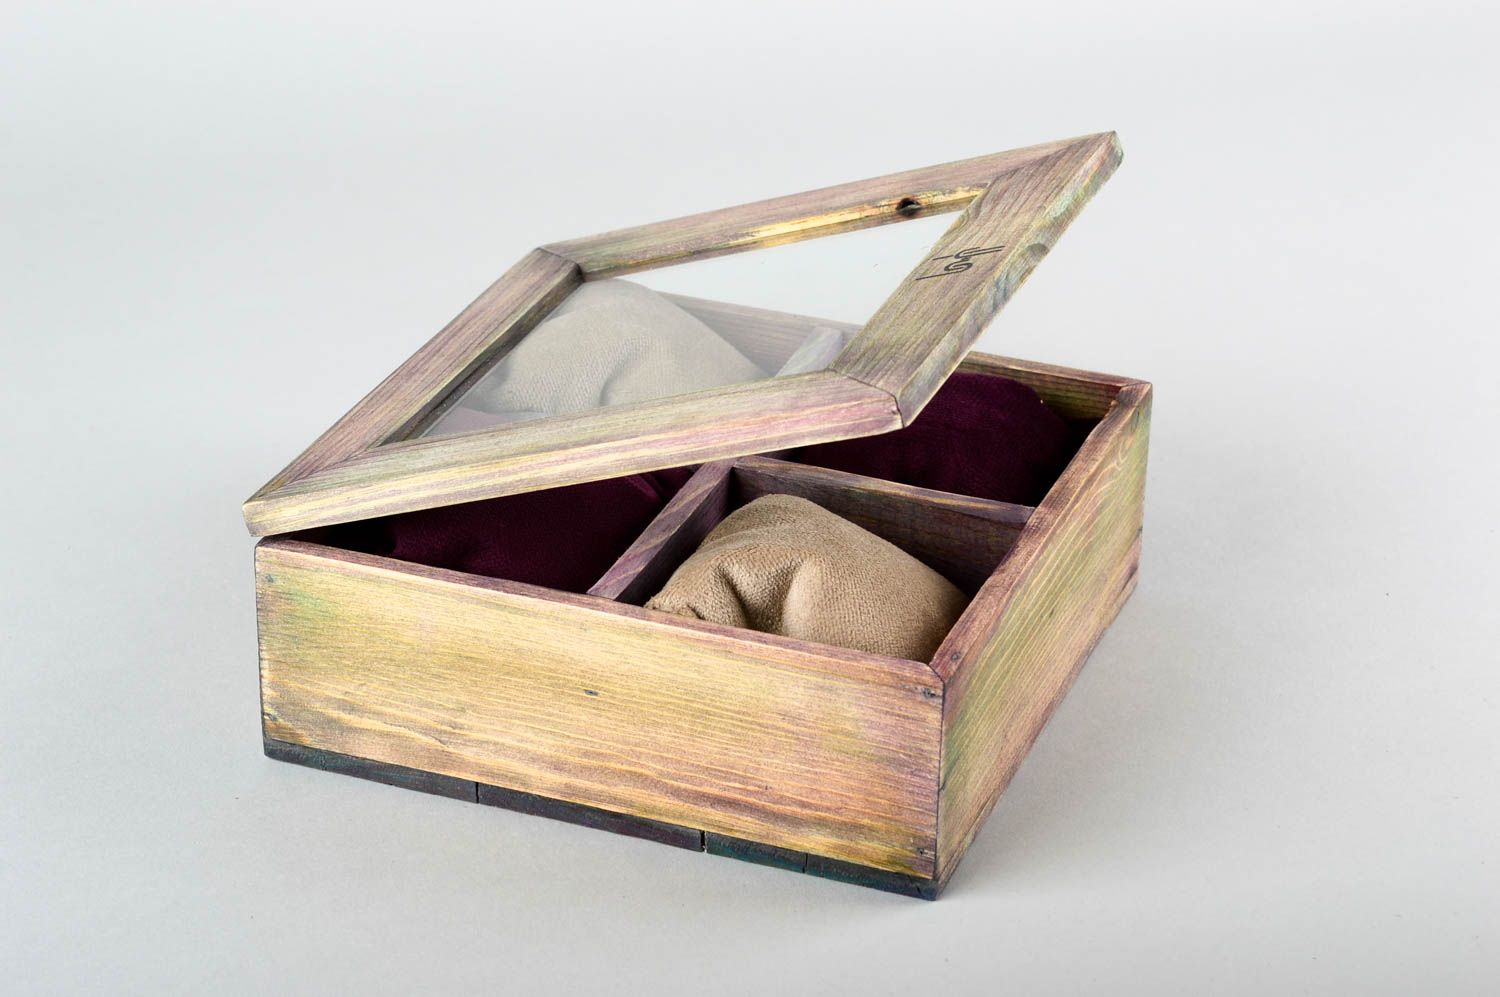 Handmade wooden box for watches decorative box design room decor ideas photo 1